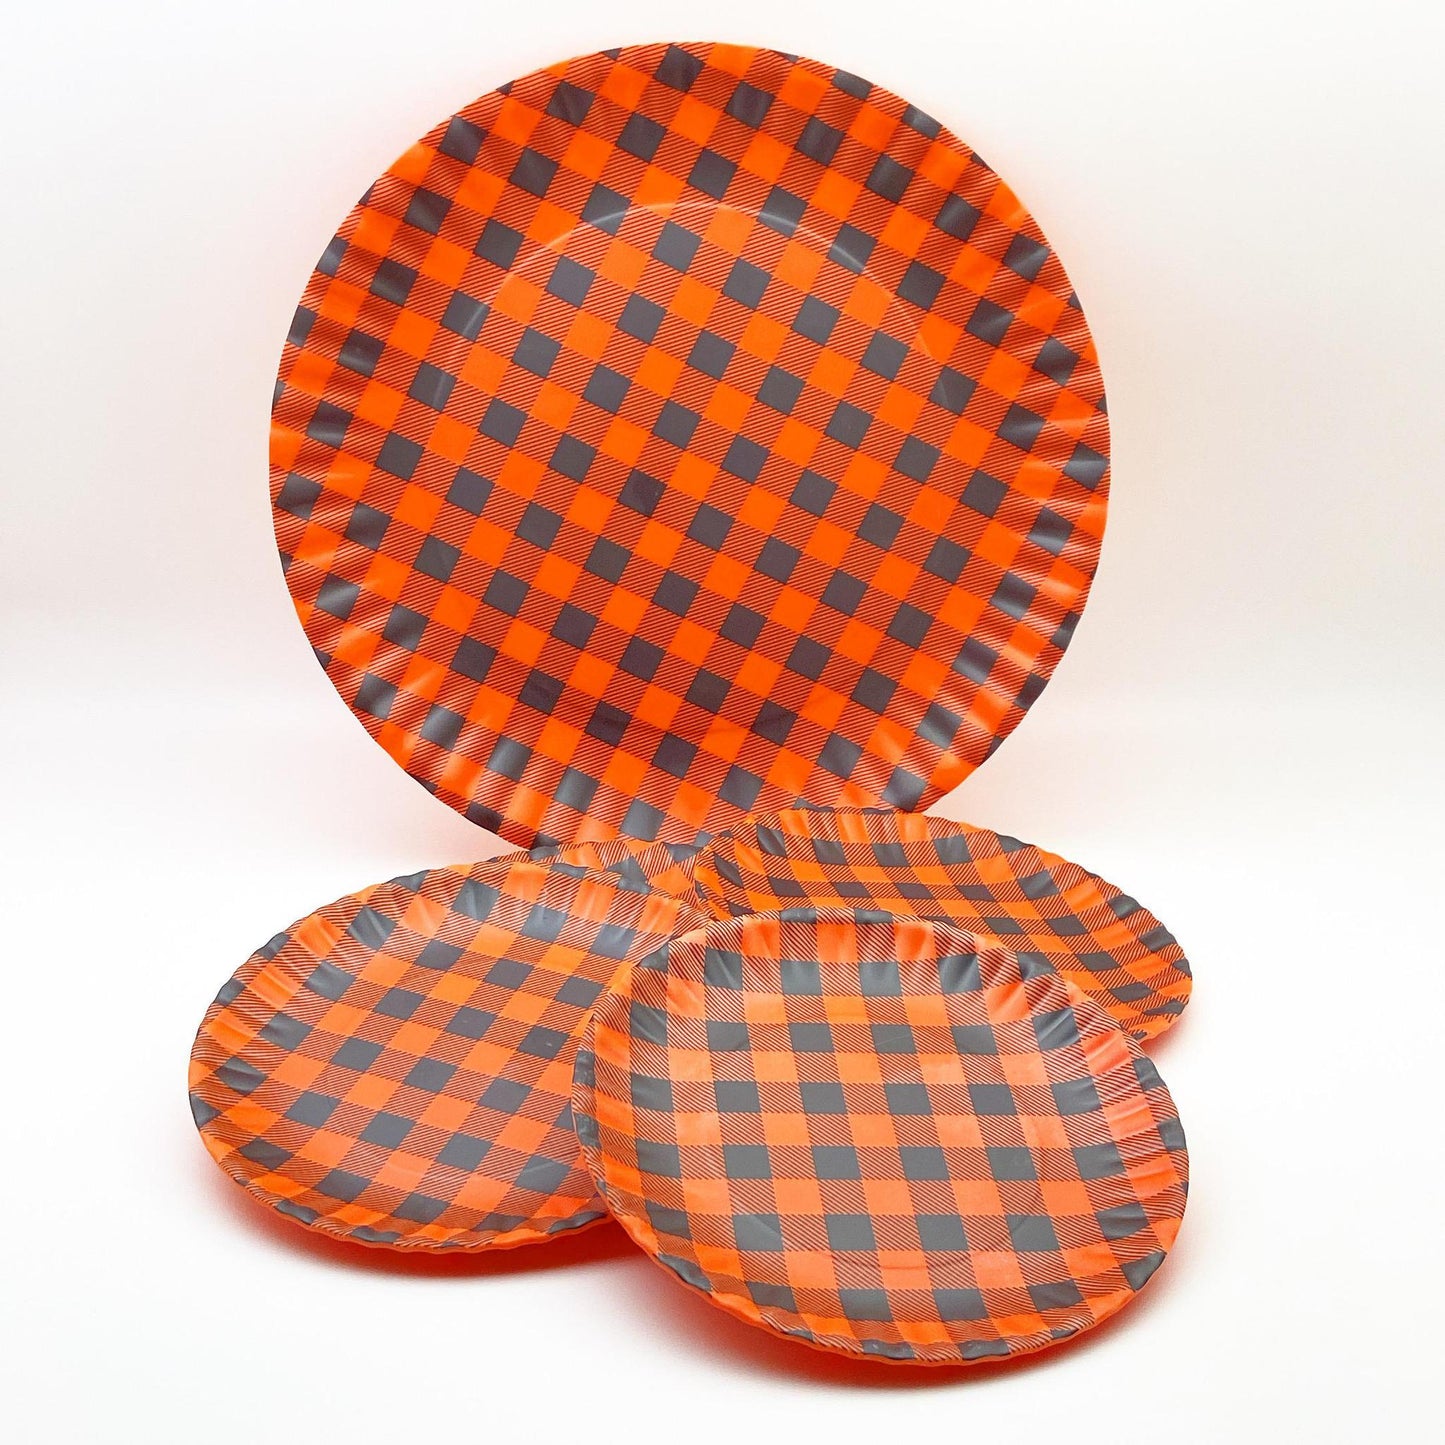 Platter - Orange/Black Gingham - 16" "Paper" Plate